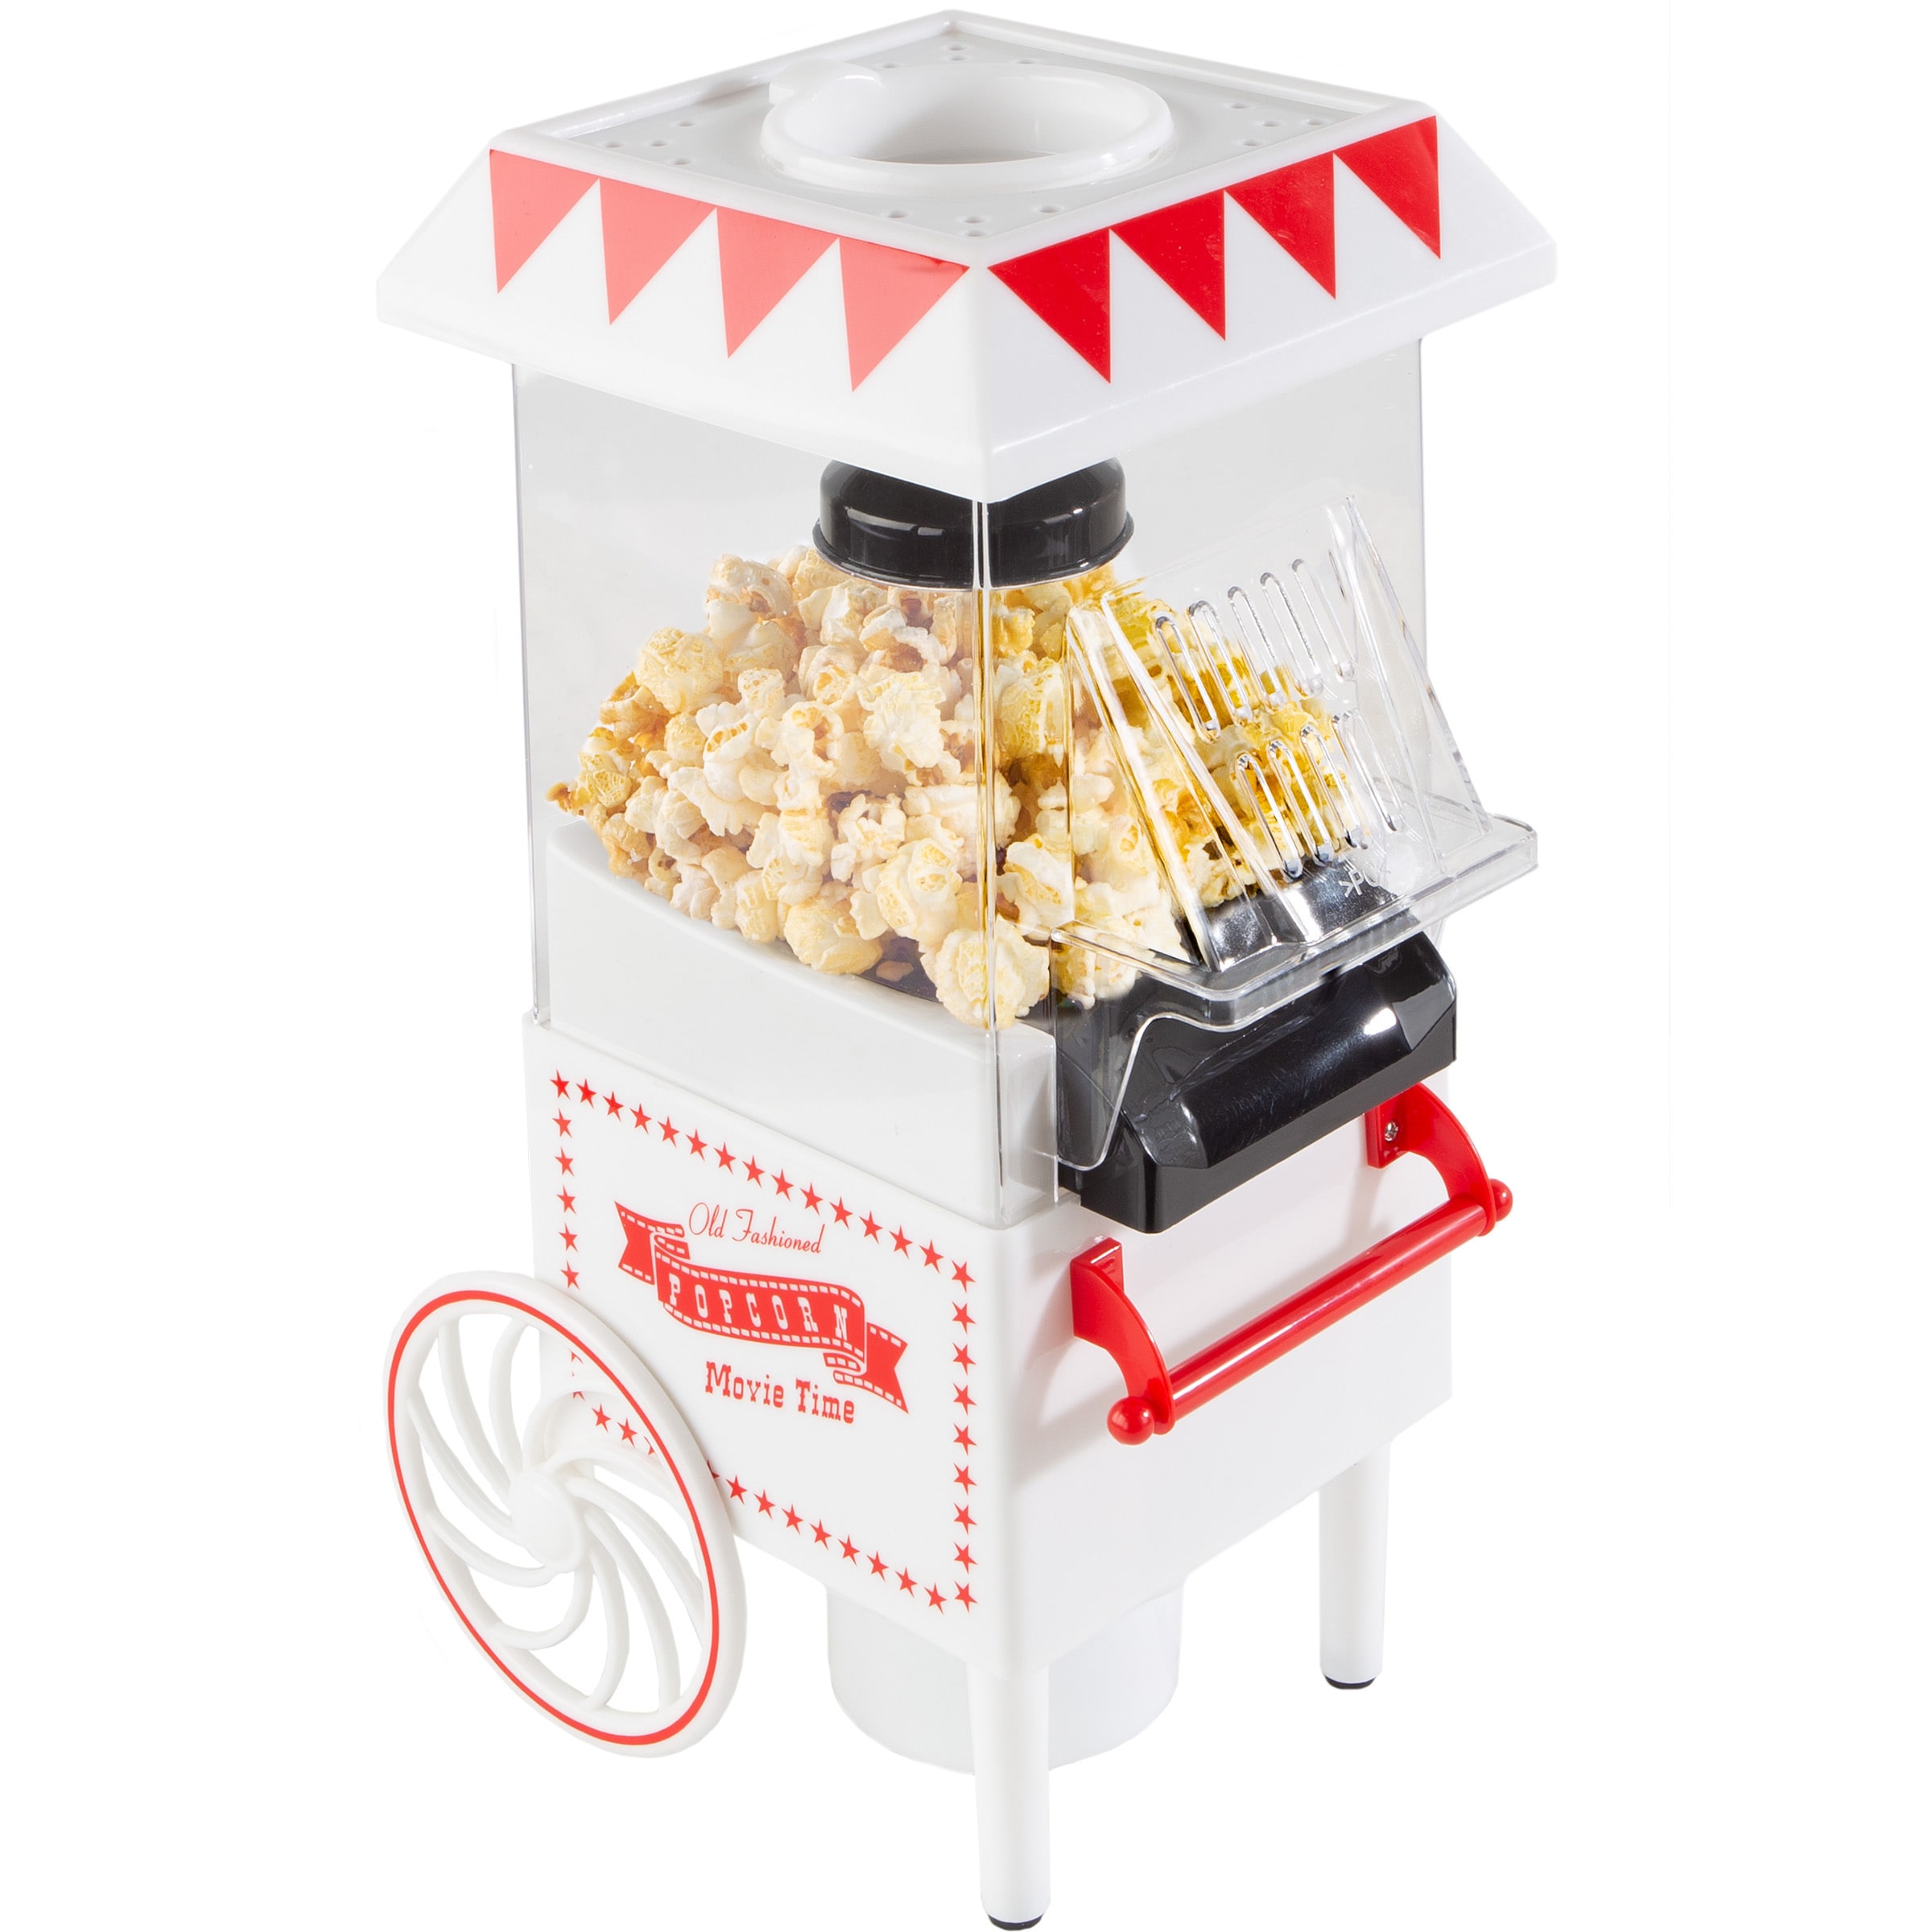 Great Northern Popcorn 4oz Tabletop Popcorn Machine with Warming